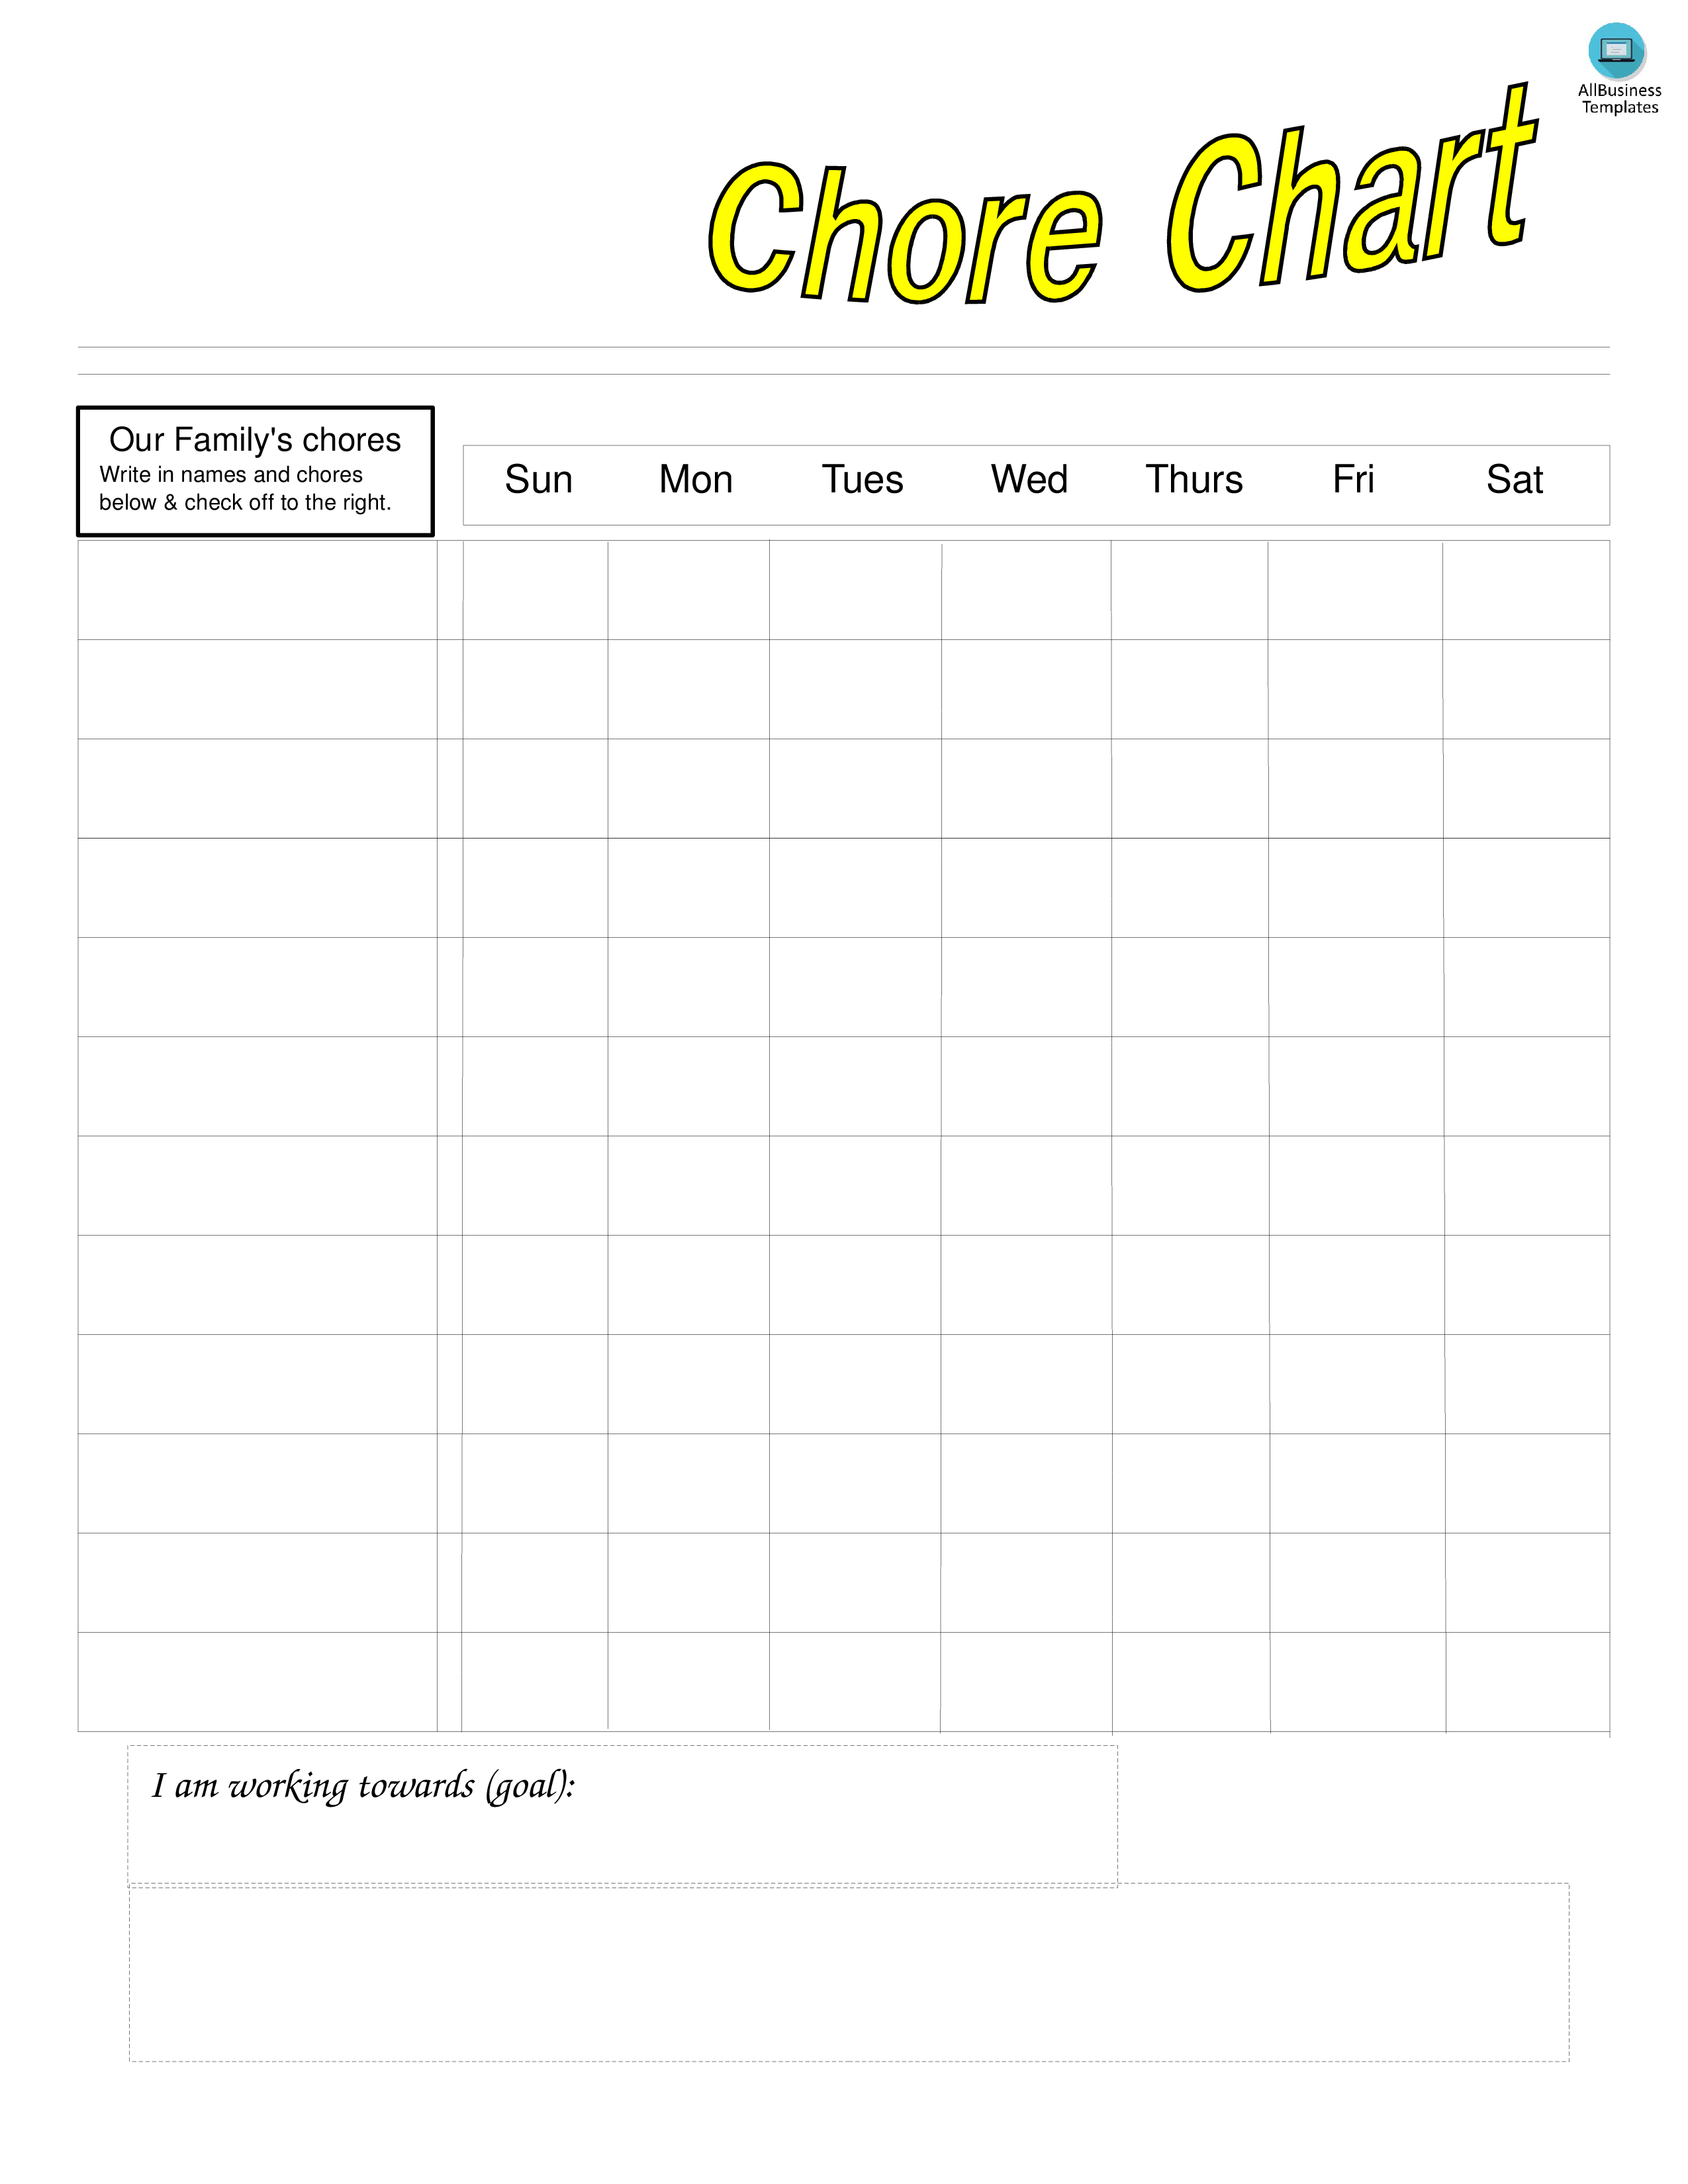 Blank Chore Chart For Kids main image